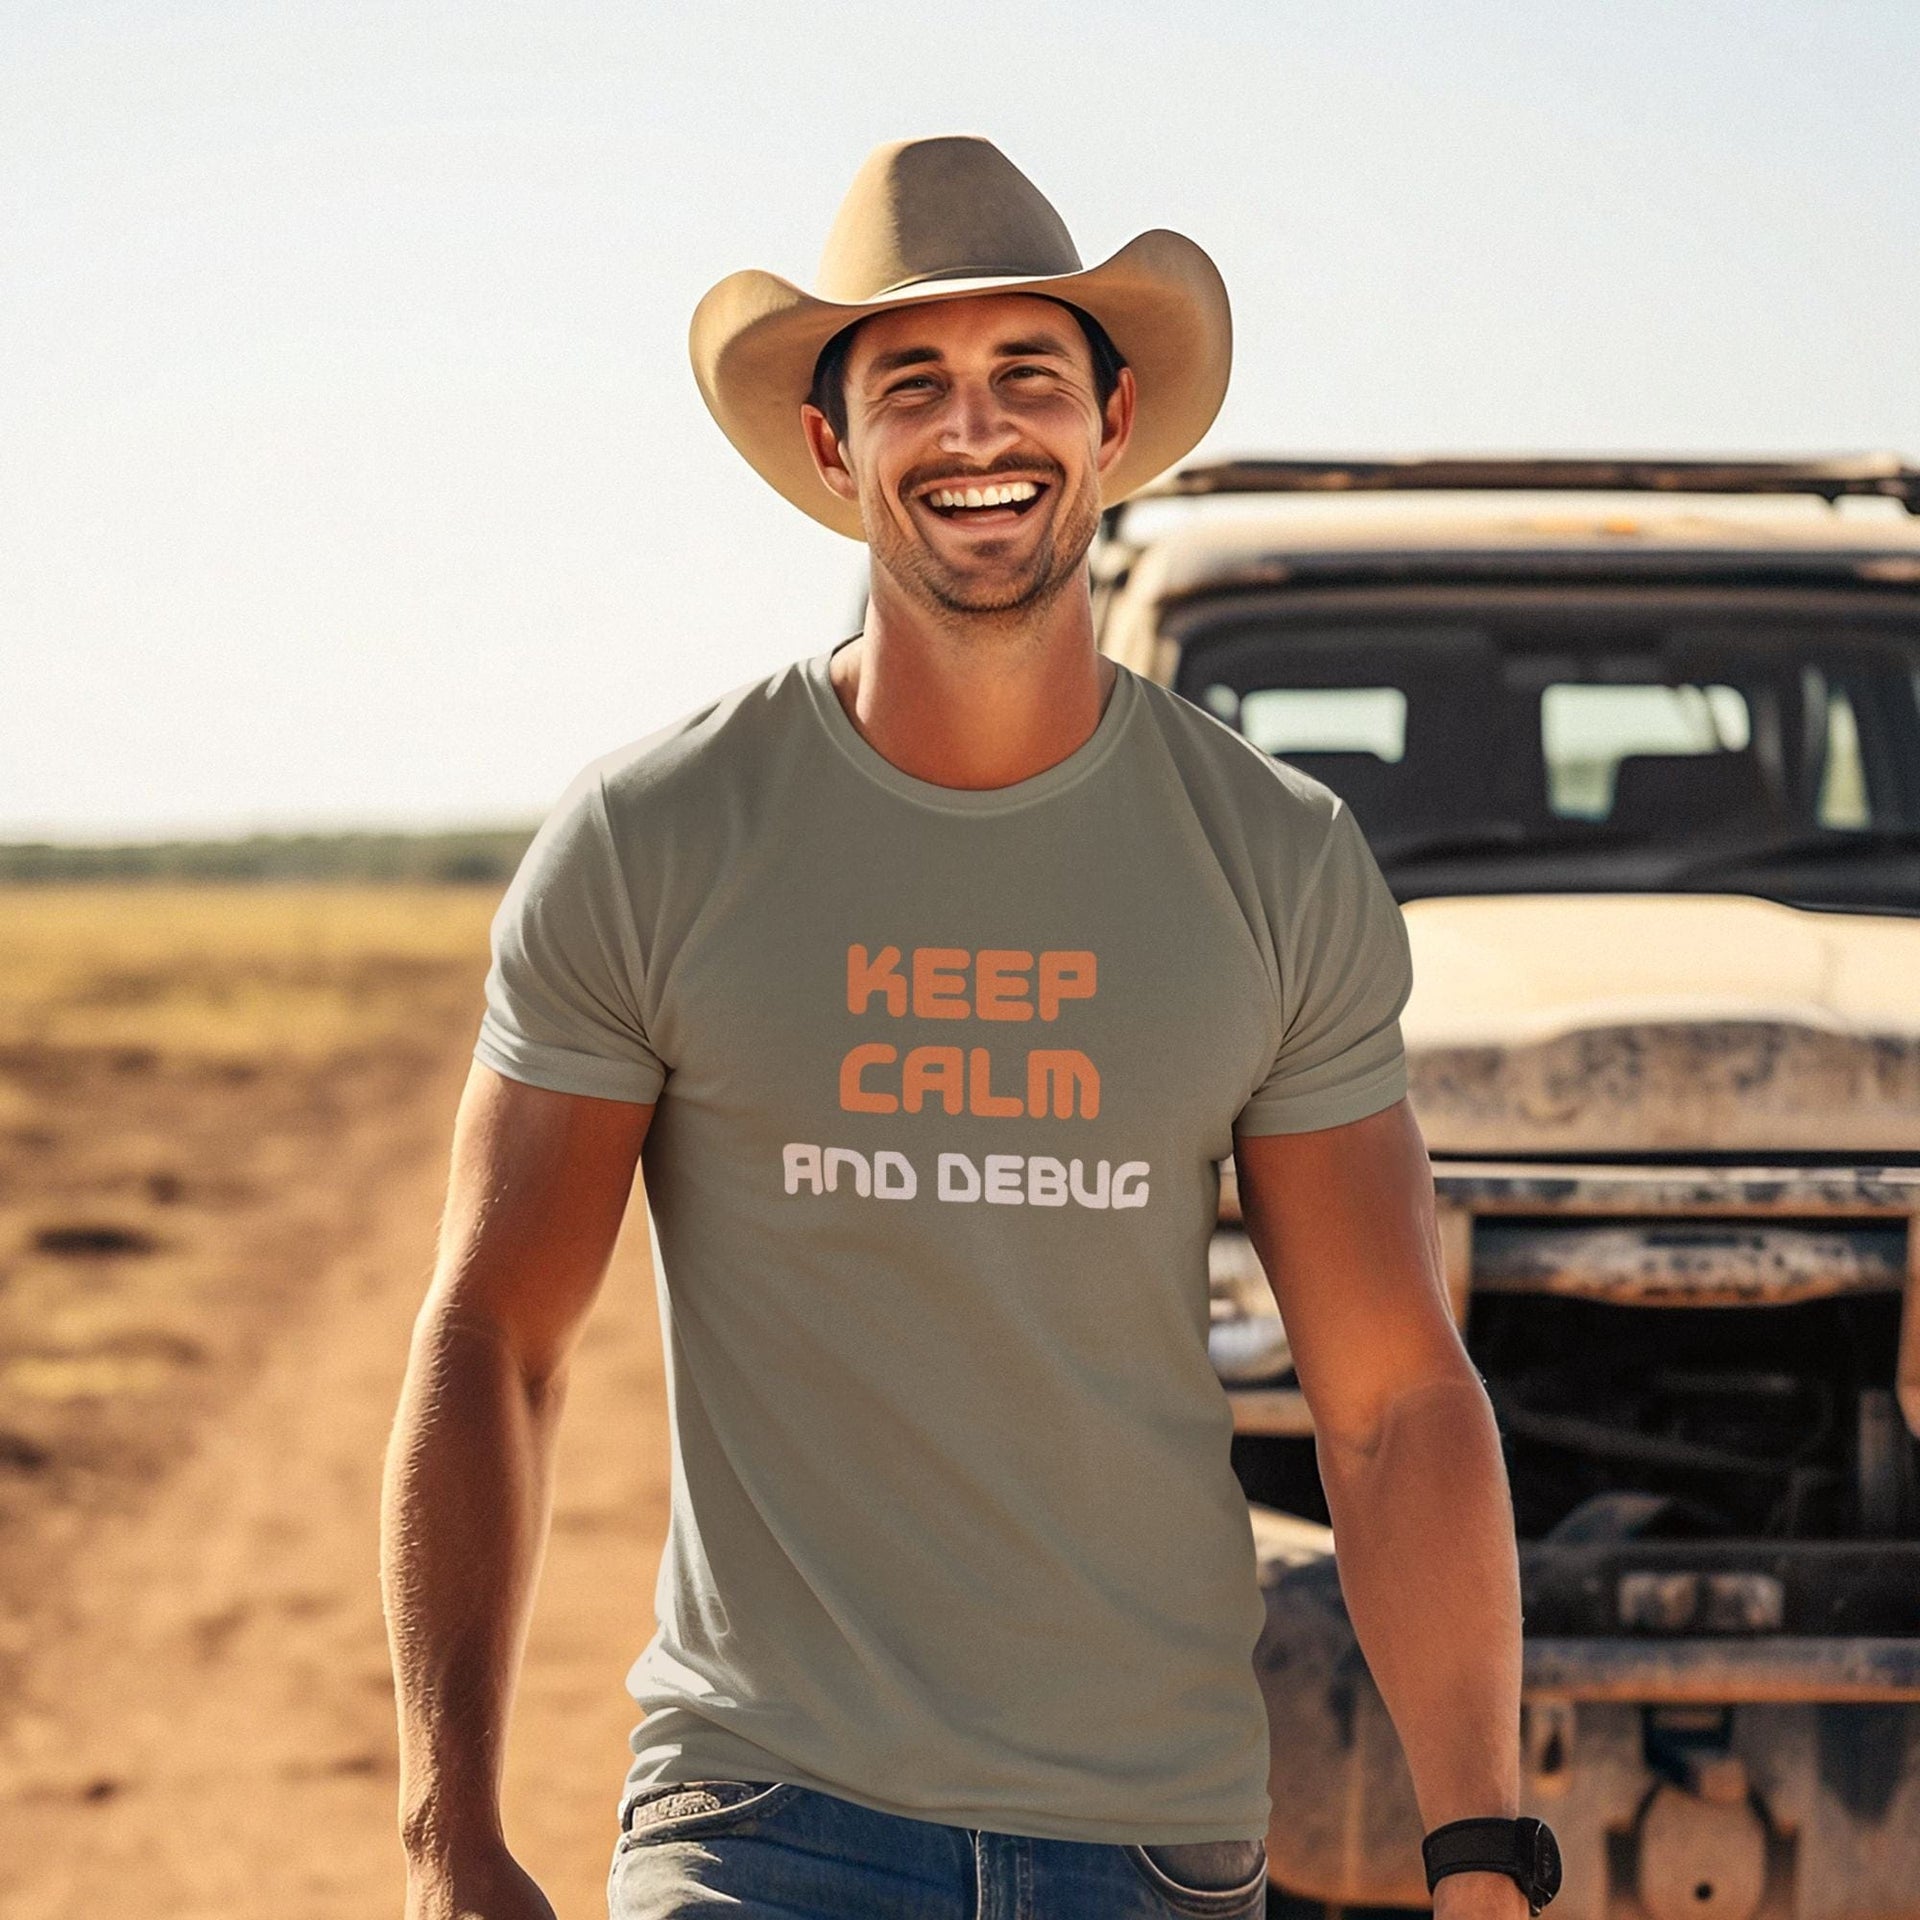 Keep Calm and Debug - Men's T-Shirt